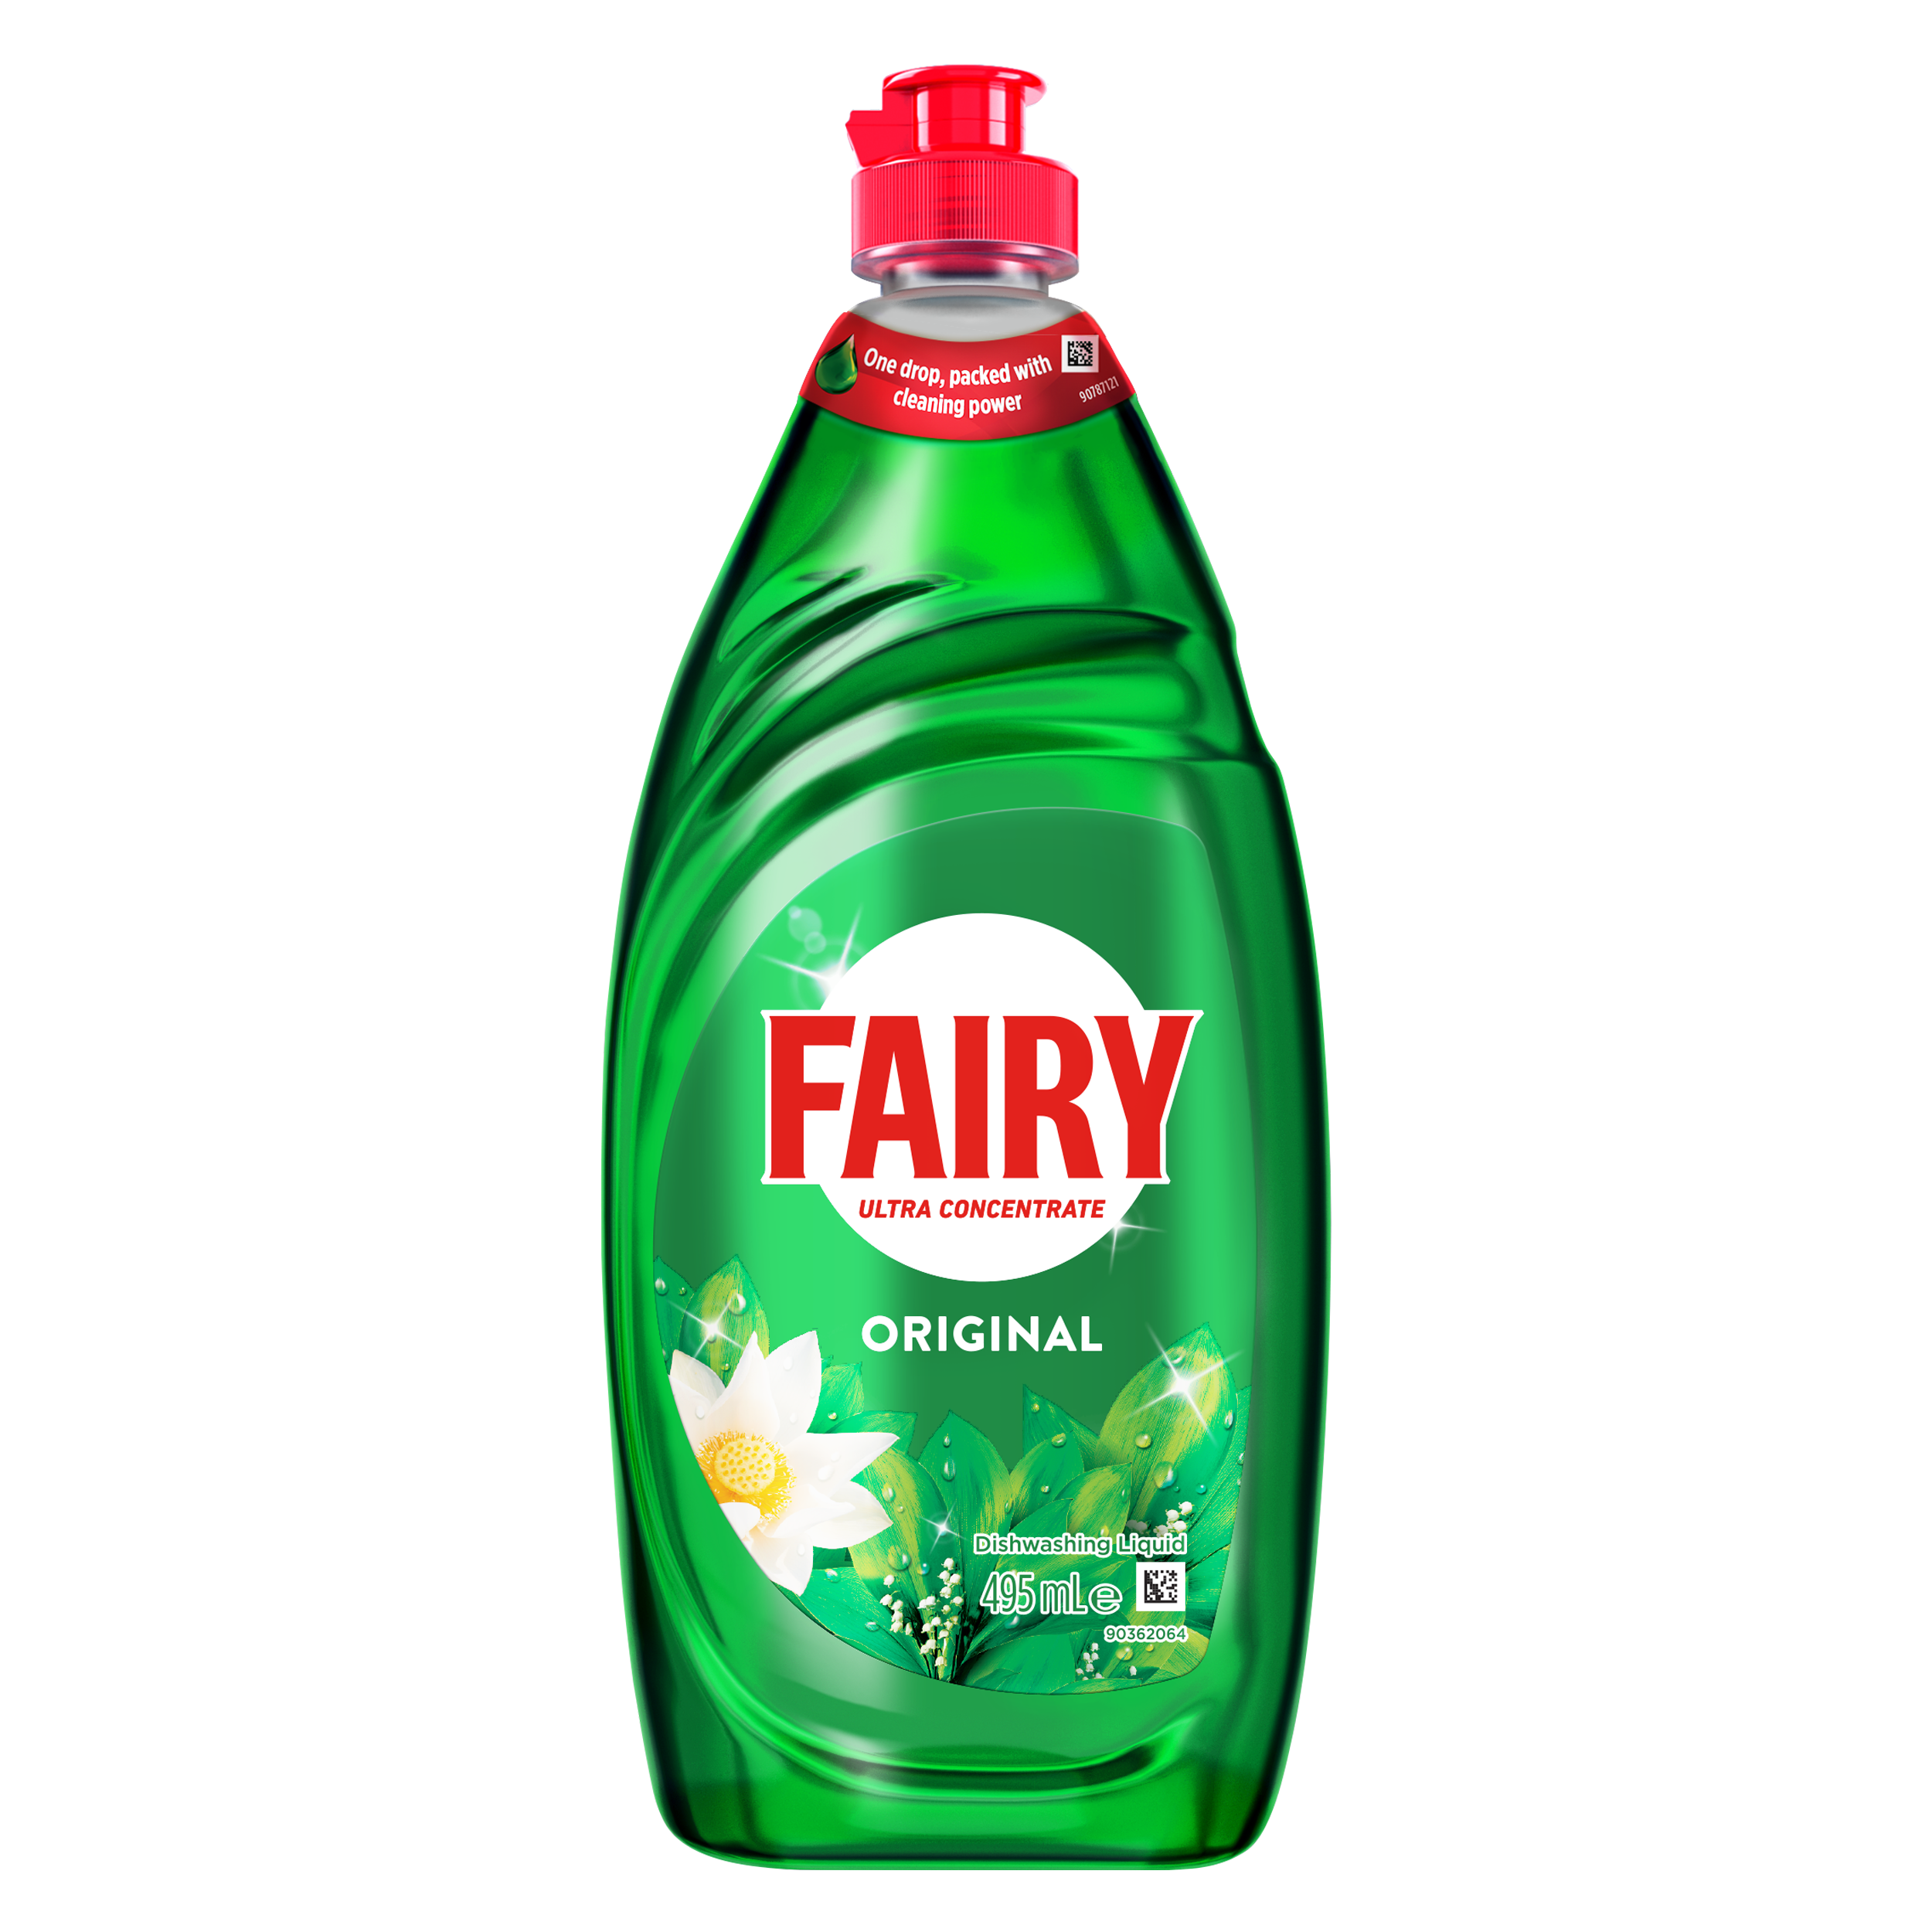 Fairy Ultra Concentrate Original Dishwashing Liquid (495ml)